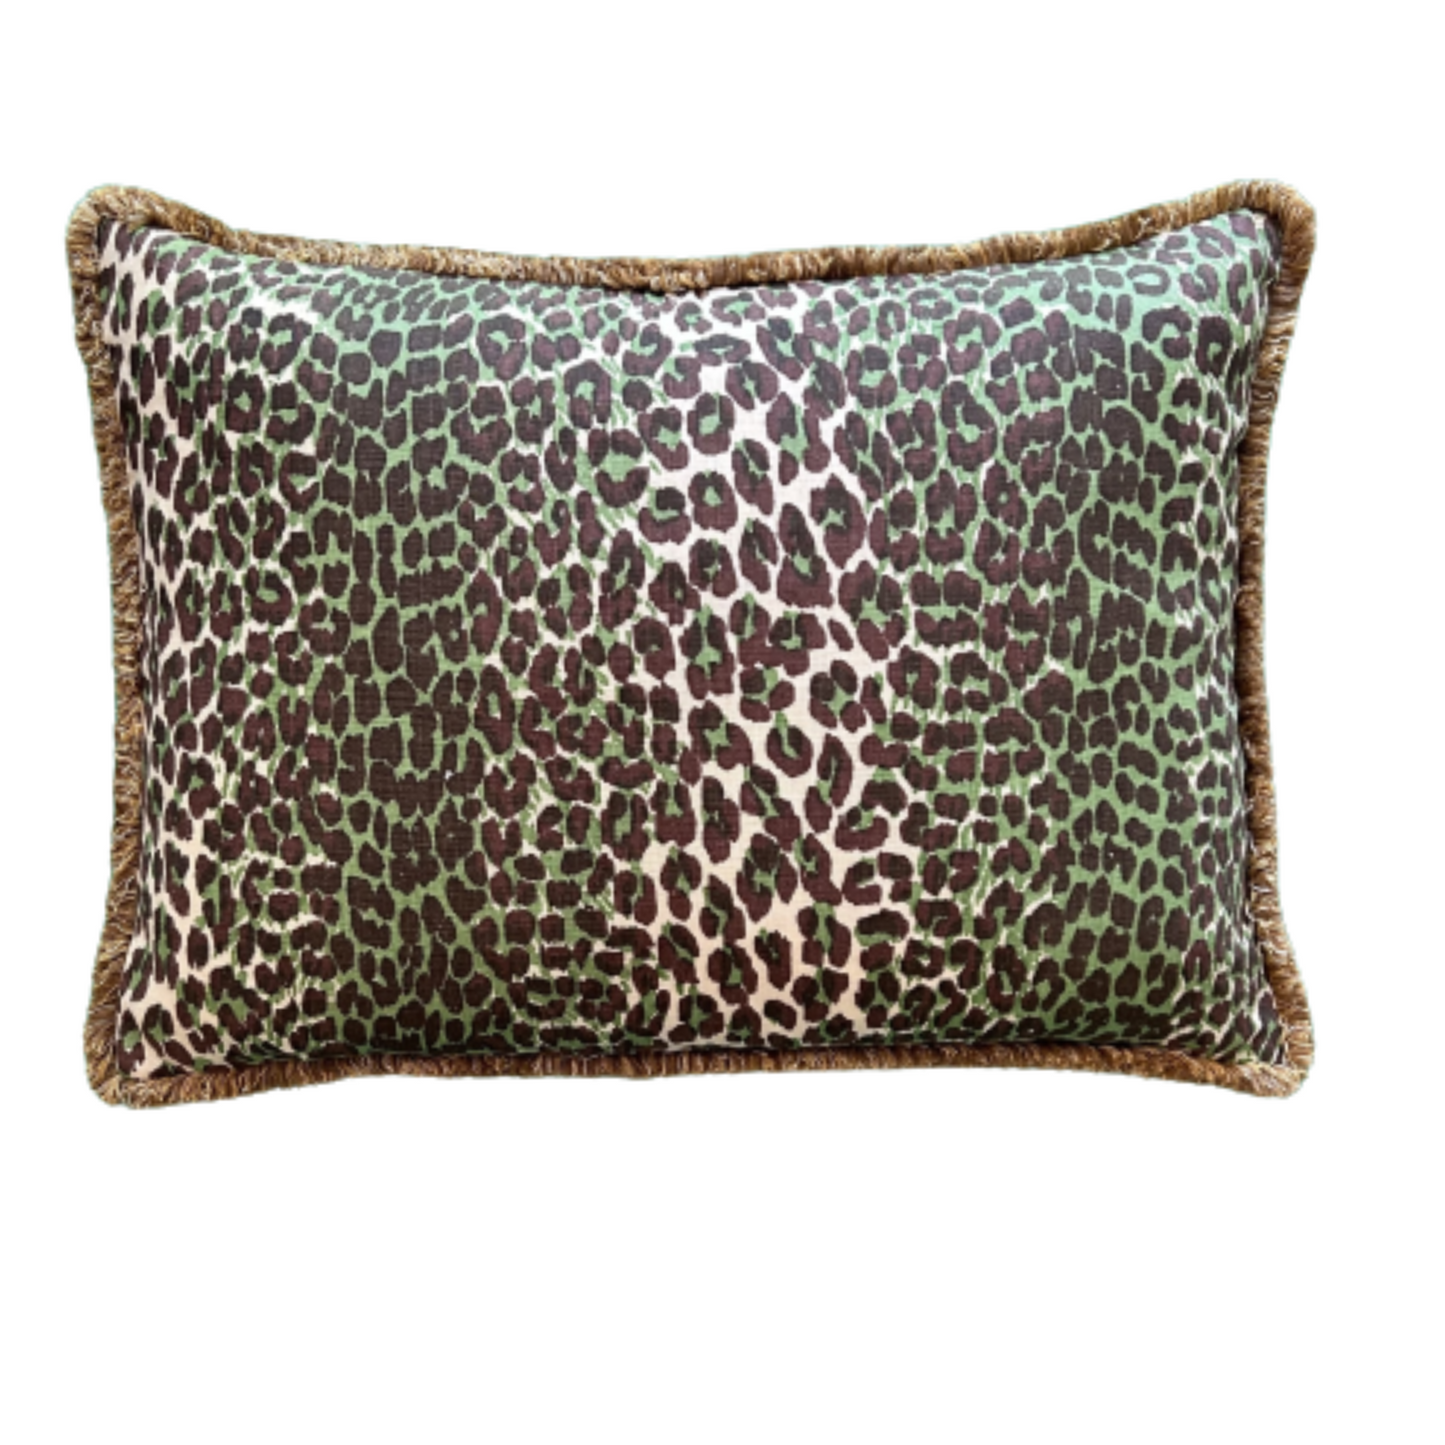 Safari Leopard Lumbar 16 x 20 Decorative Pillow with Down/Feather Insert